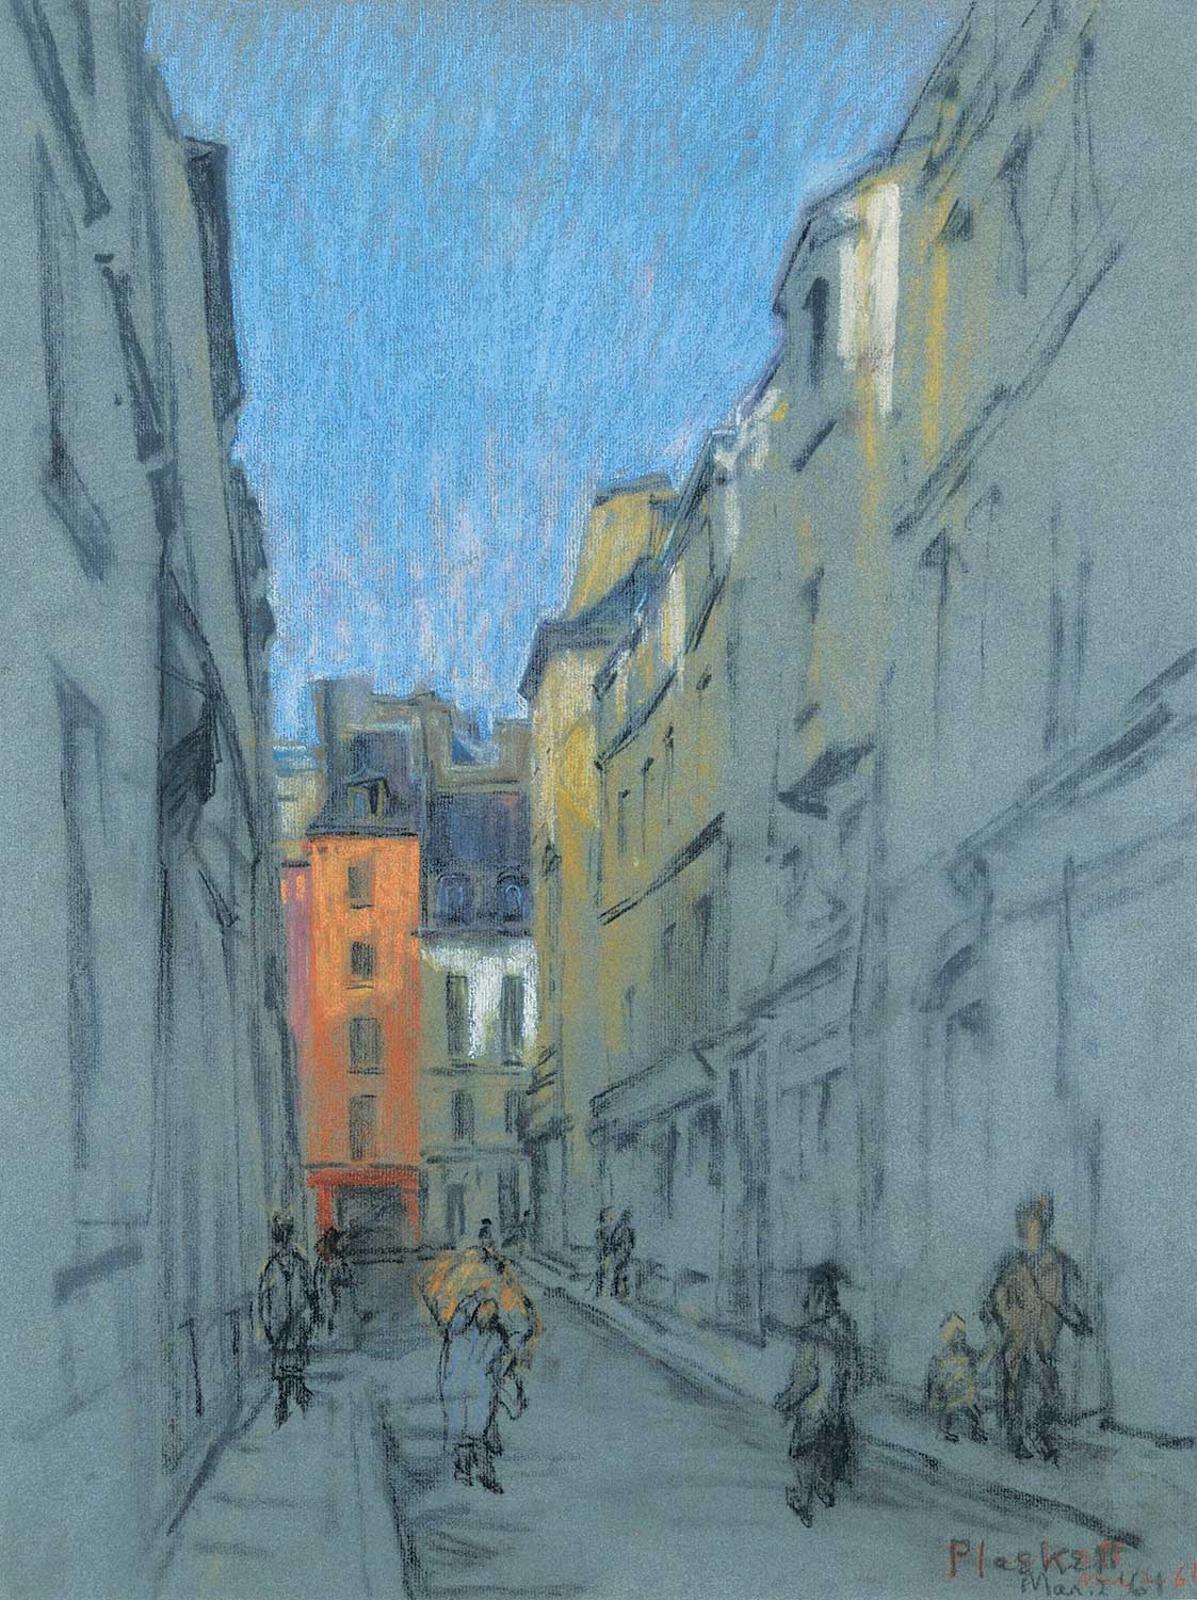 Joseph (Joe) Francis Plaskett (1918-2014) - Untitled - A Busy Street